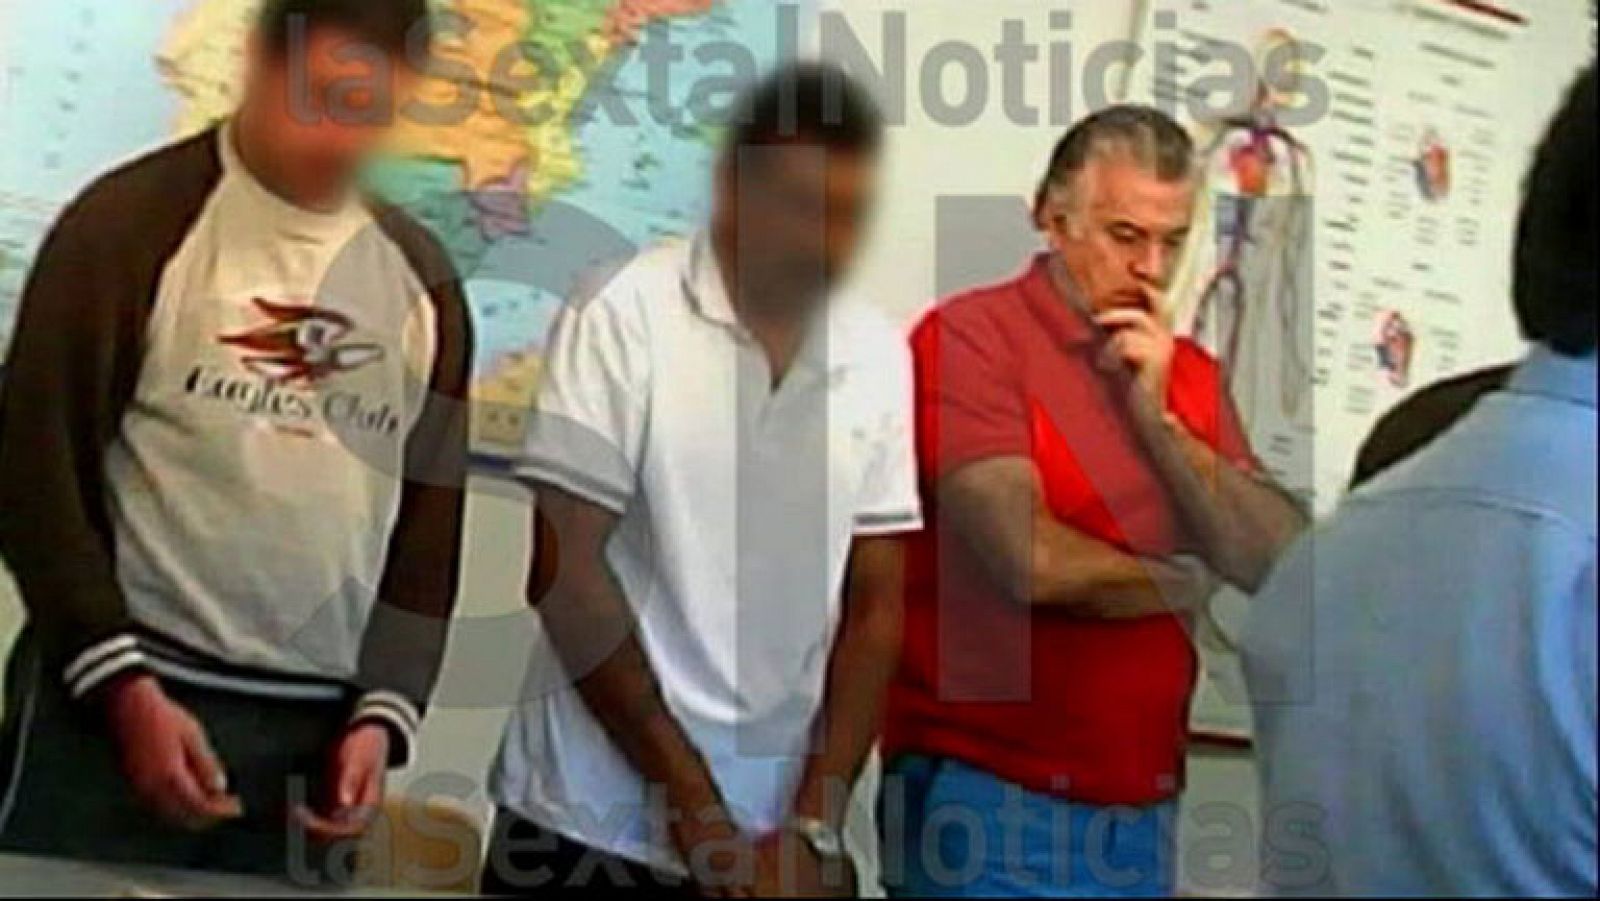 Telediario 1: Investigación vídeo cárcel Bárcenas | RTVE Play